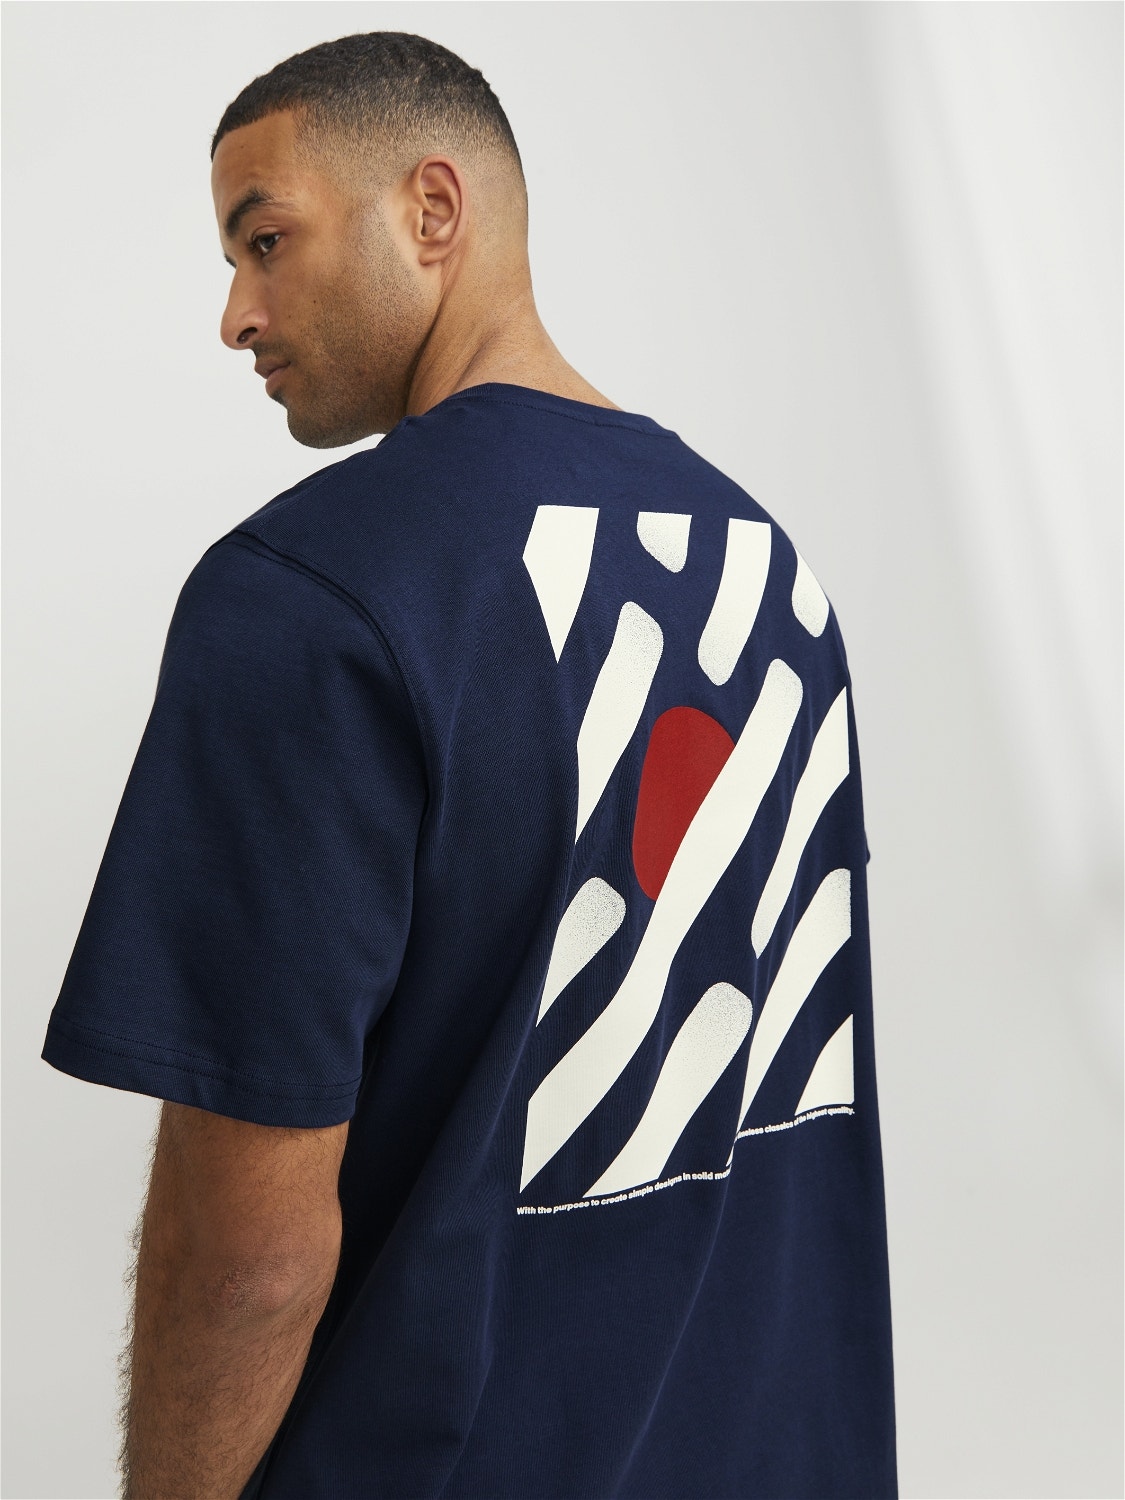 Jack & Jones RDD Printed Crew neck T-shirt -Navy Blazer - 12253164